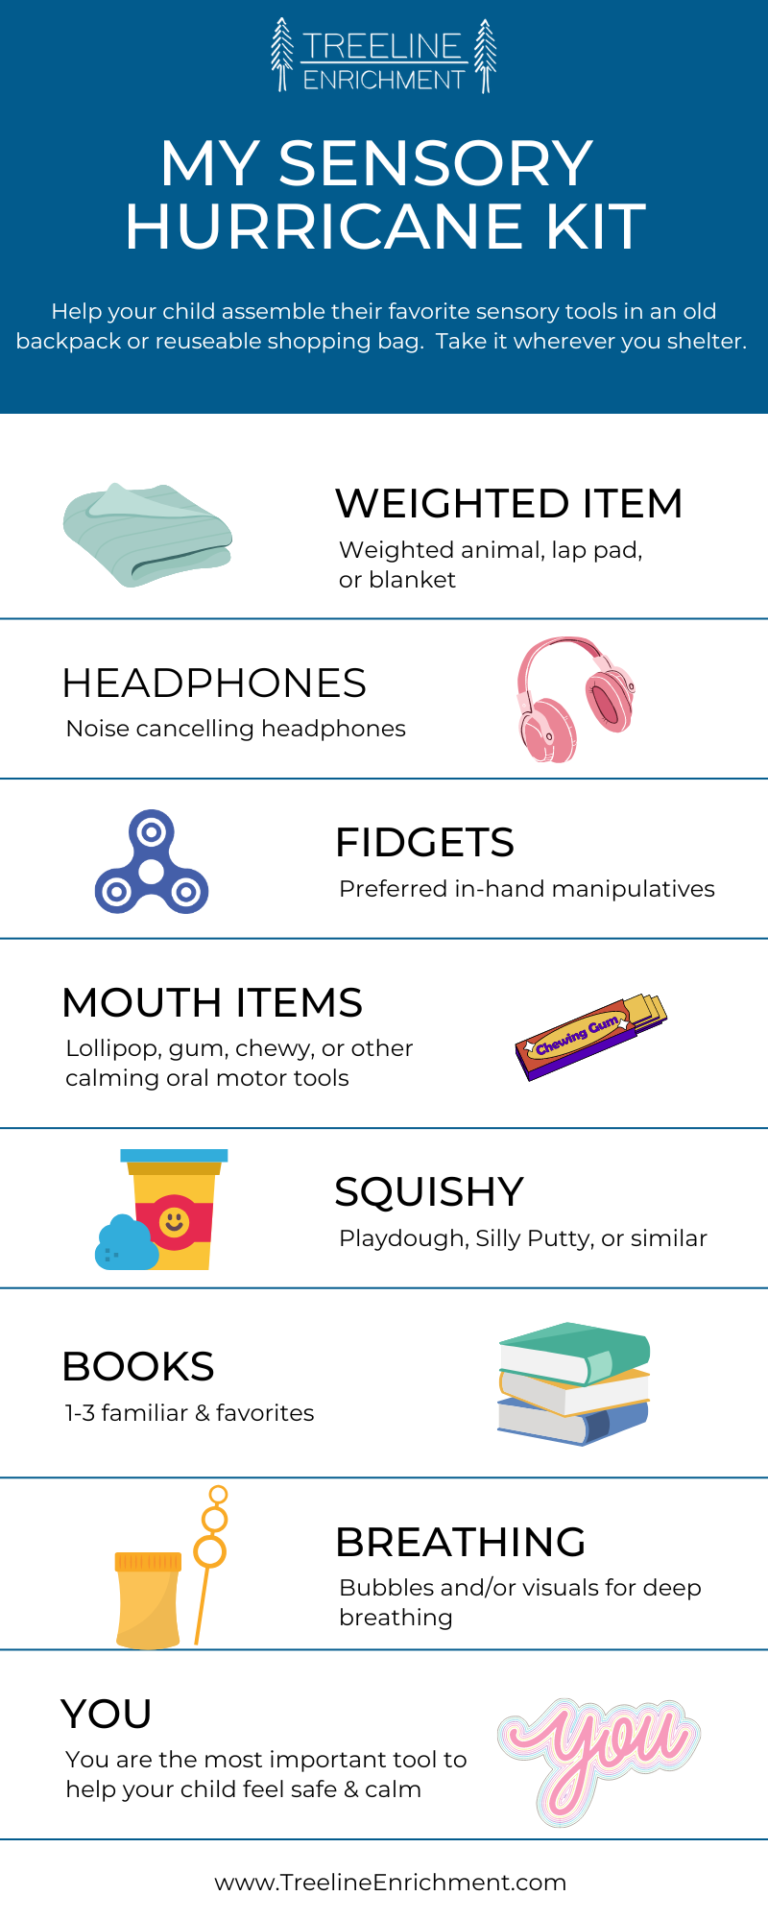 infographic for sensory hurricane kit preparations